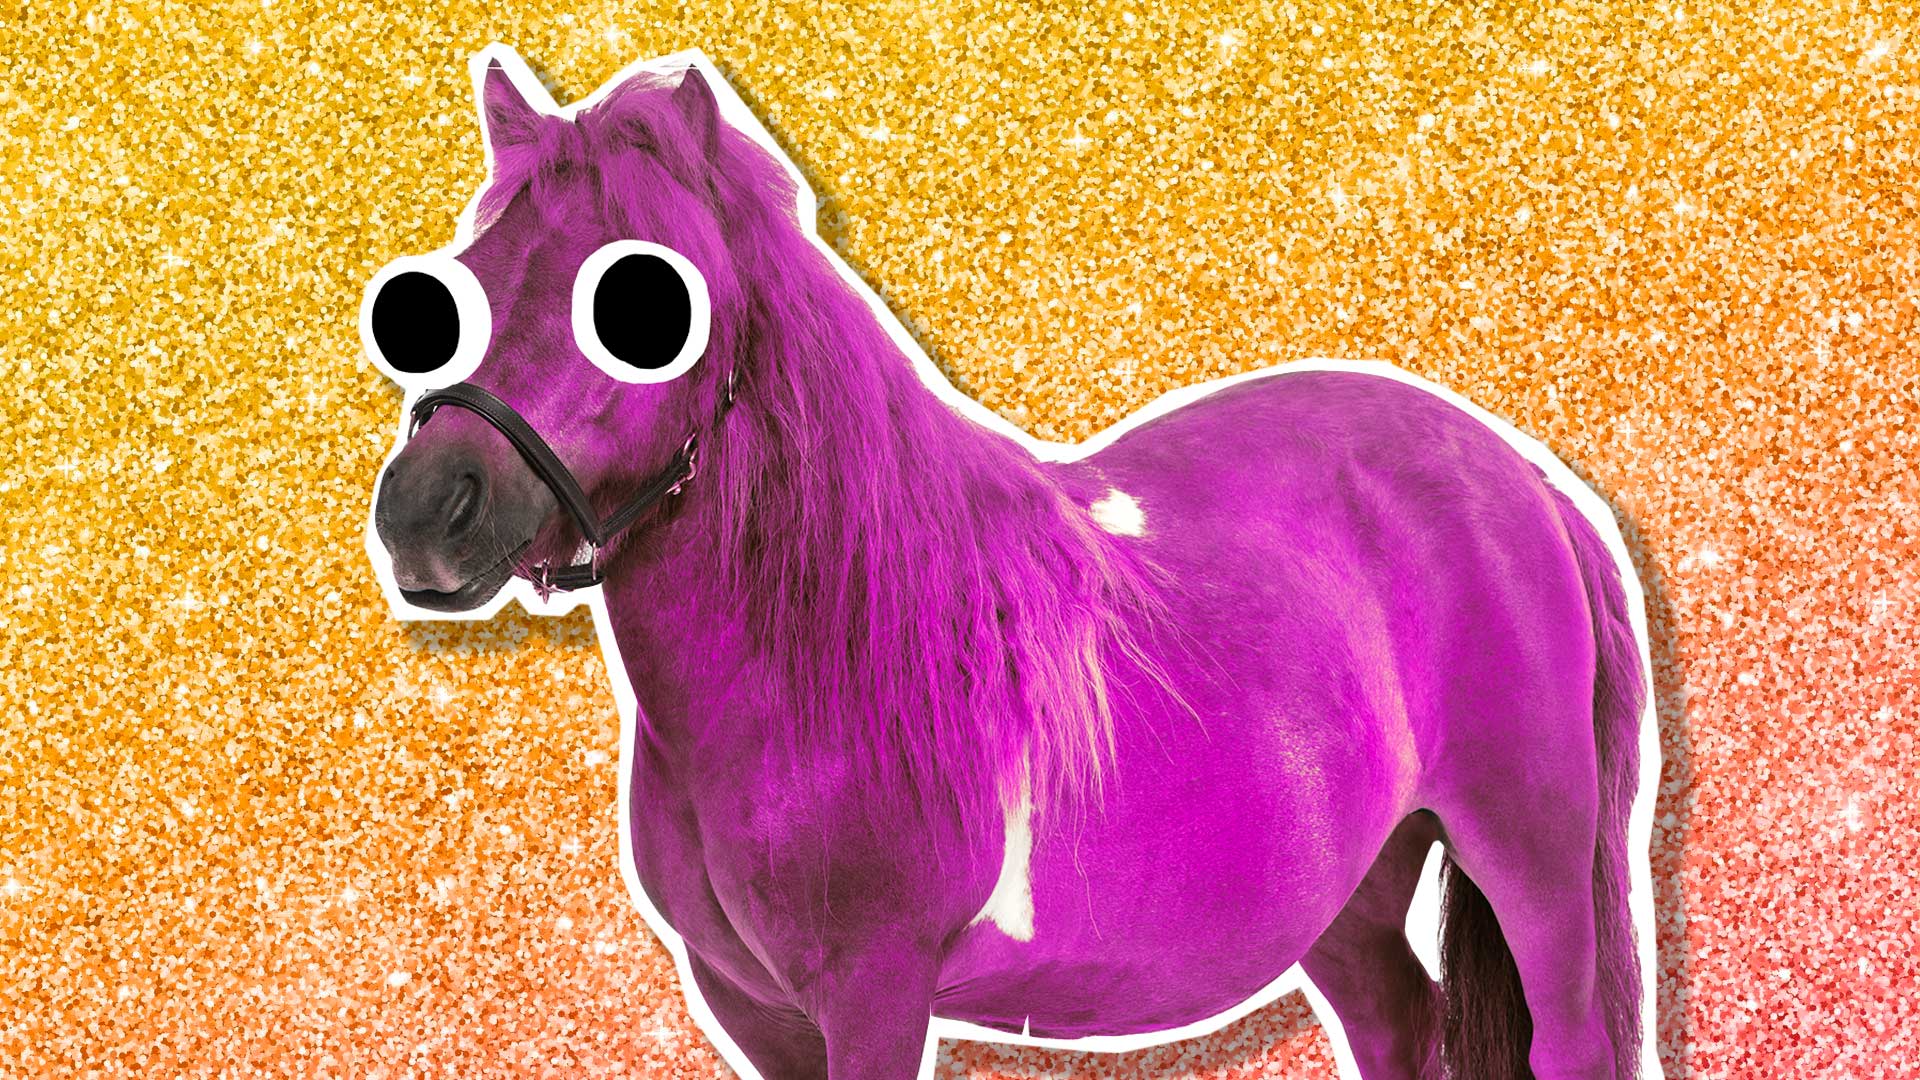 A pink pony